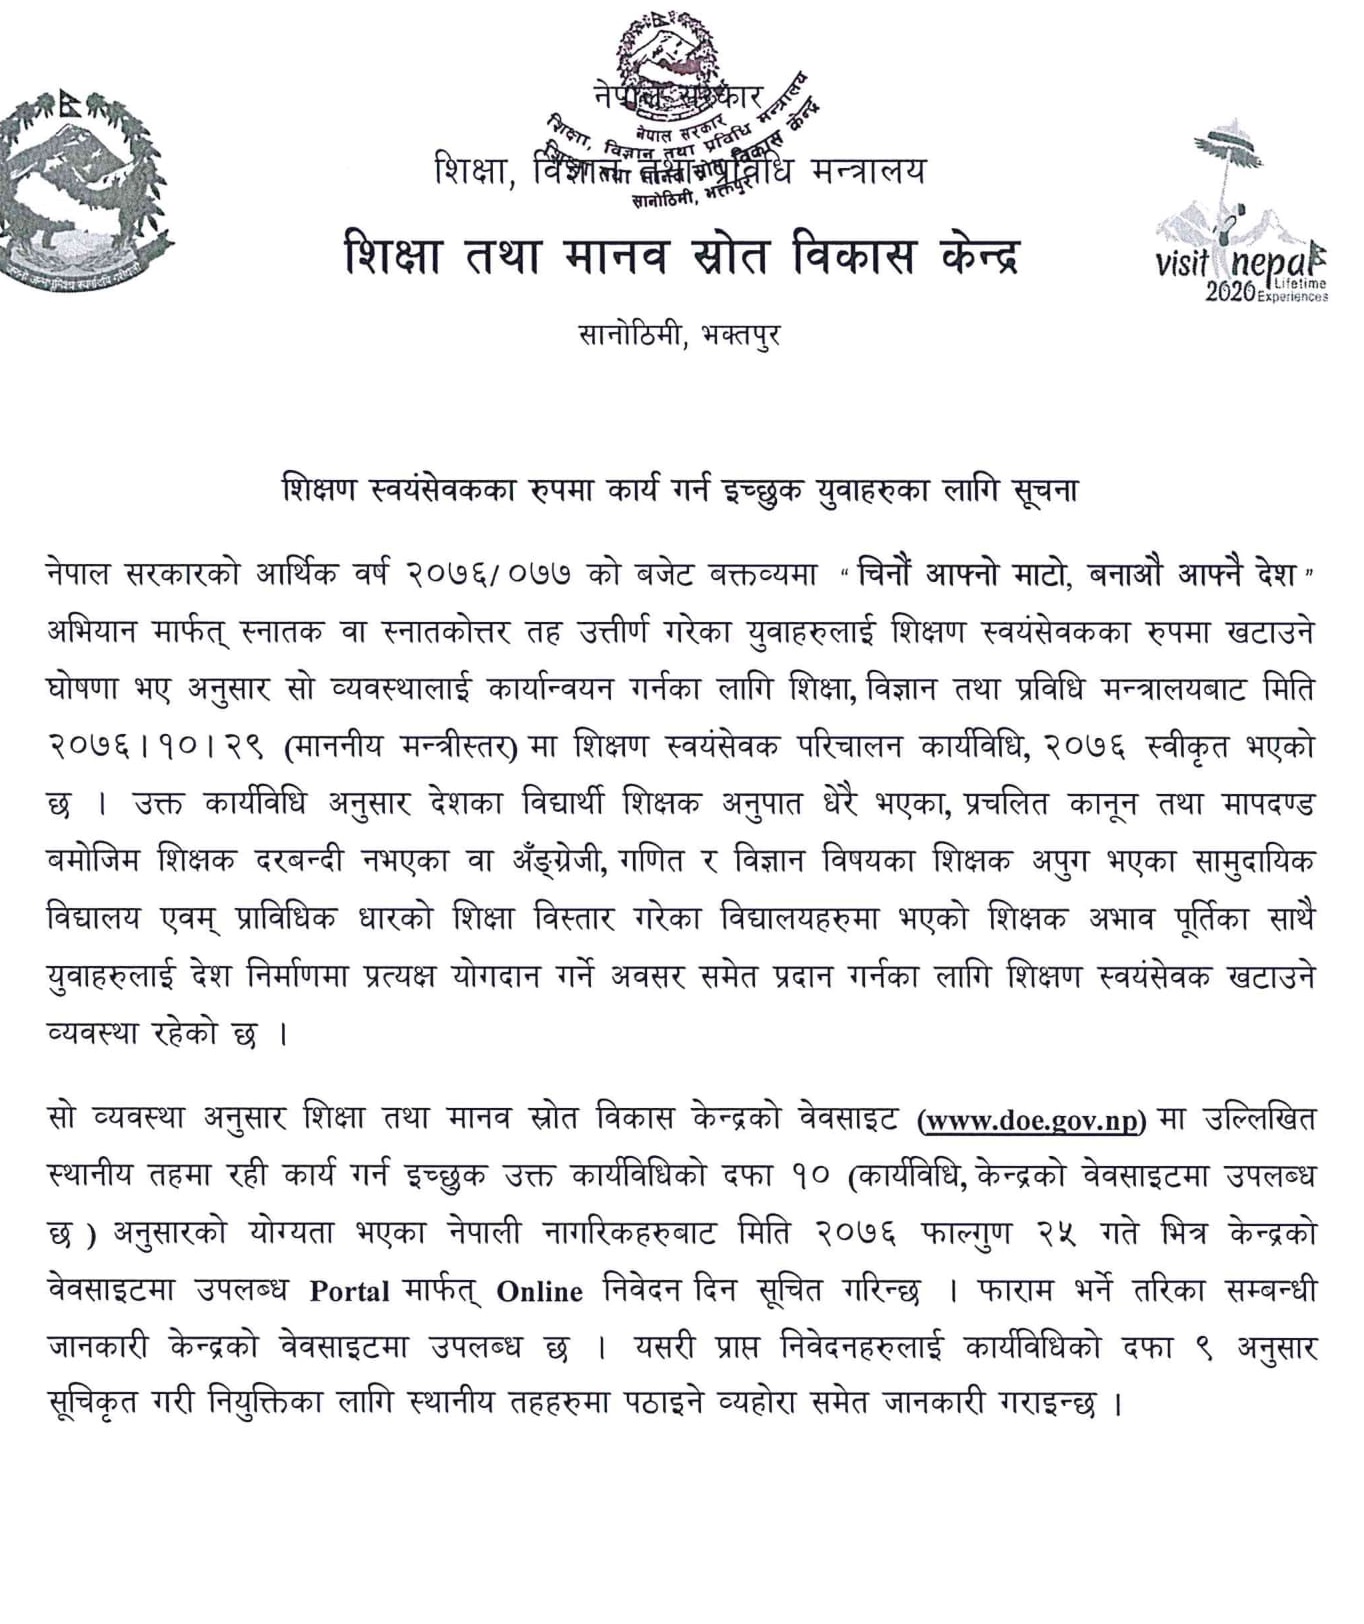 application letter for scholarship in nepali